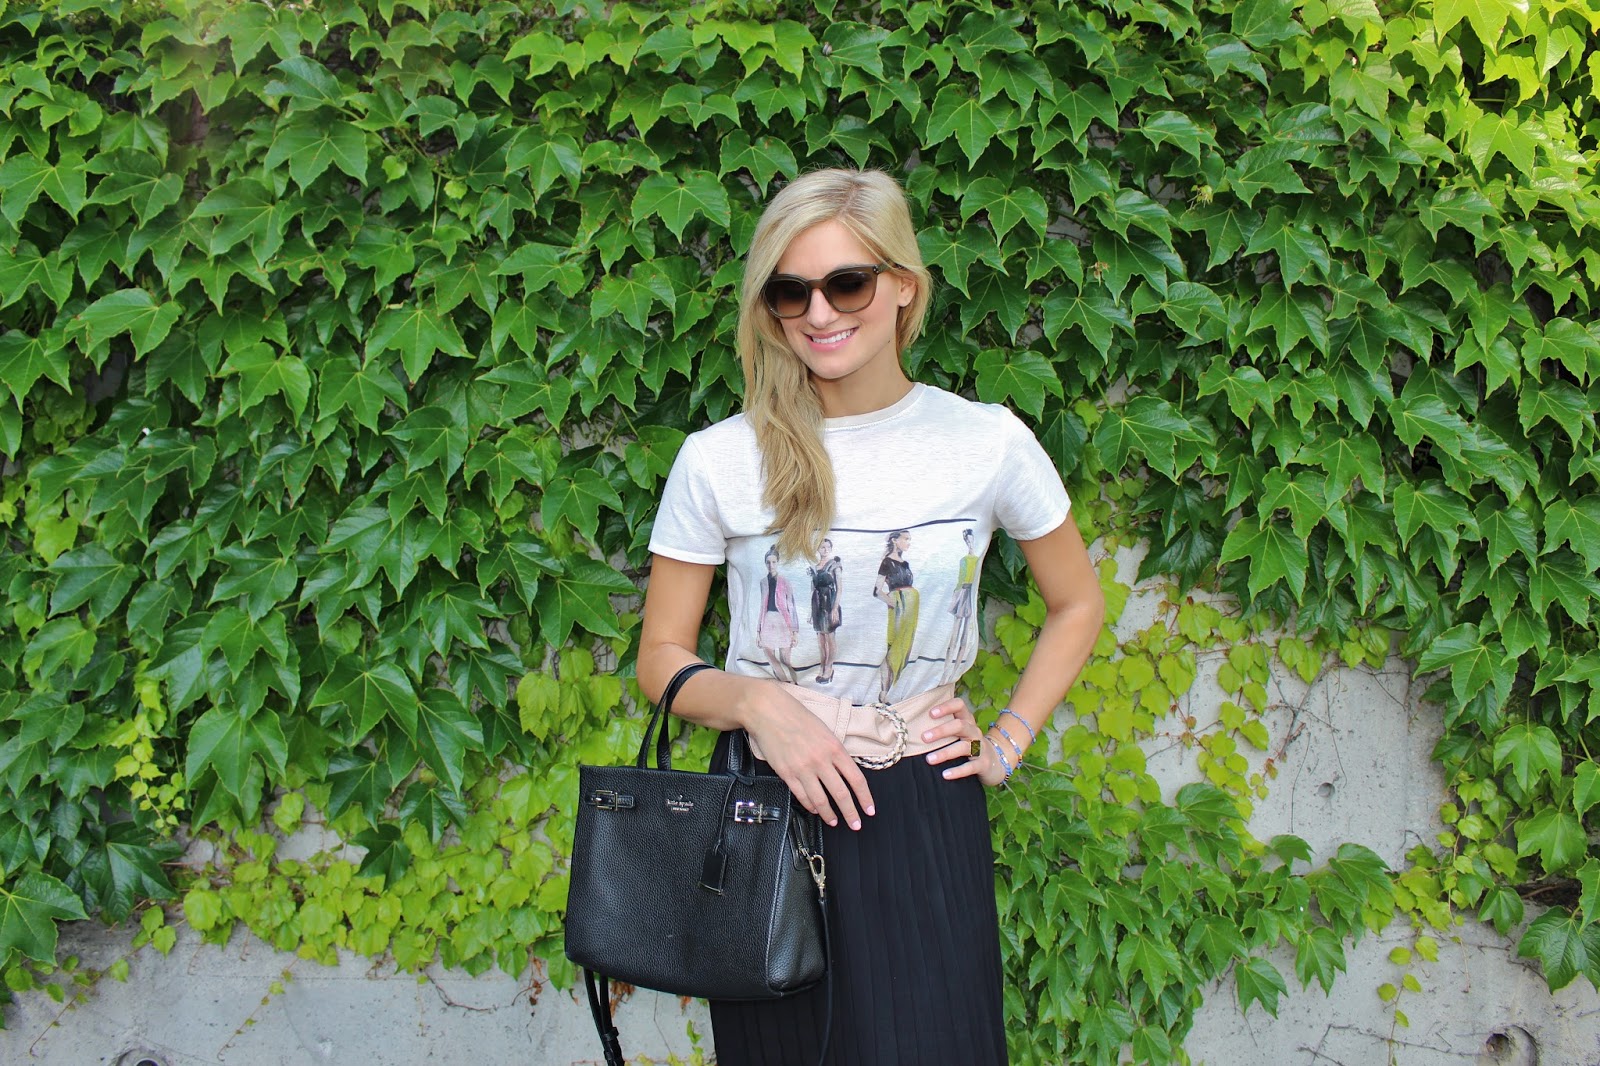 bijuleni - Zara printed top and Kate Spade purse